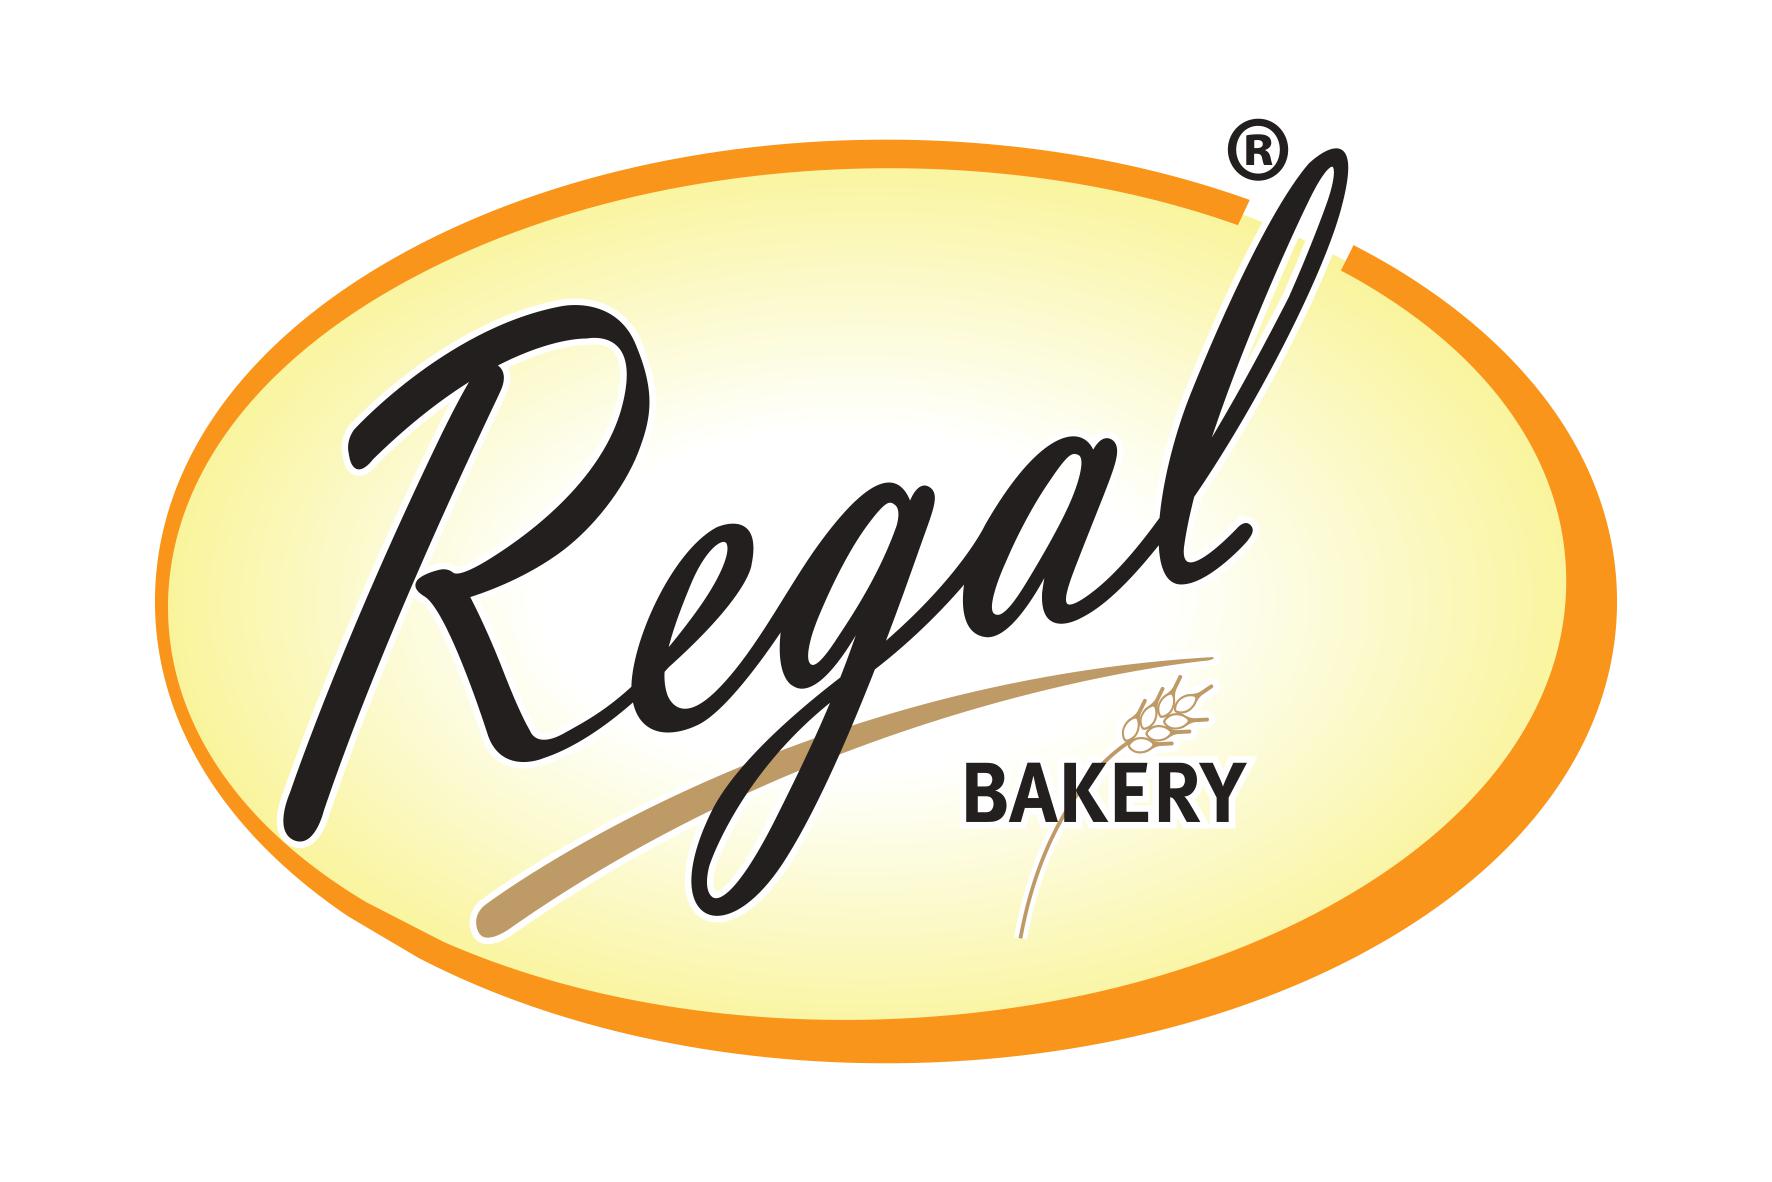 Regal Bakery 